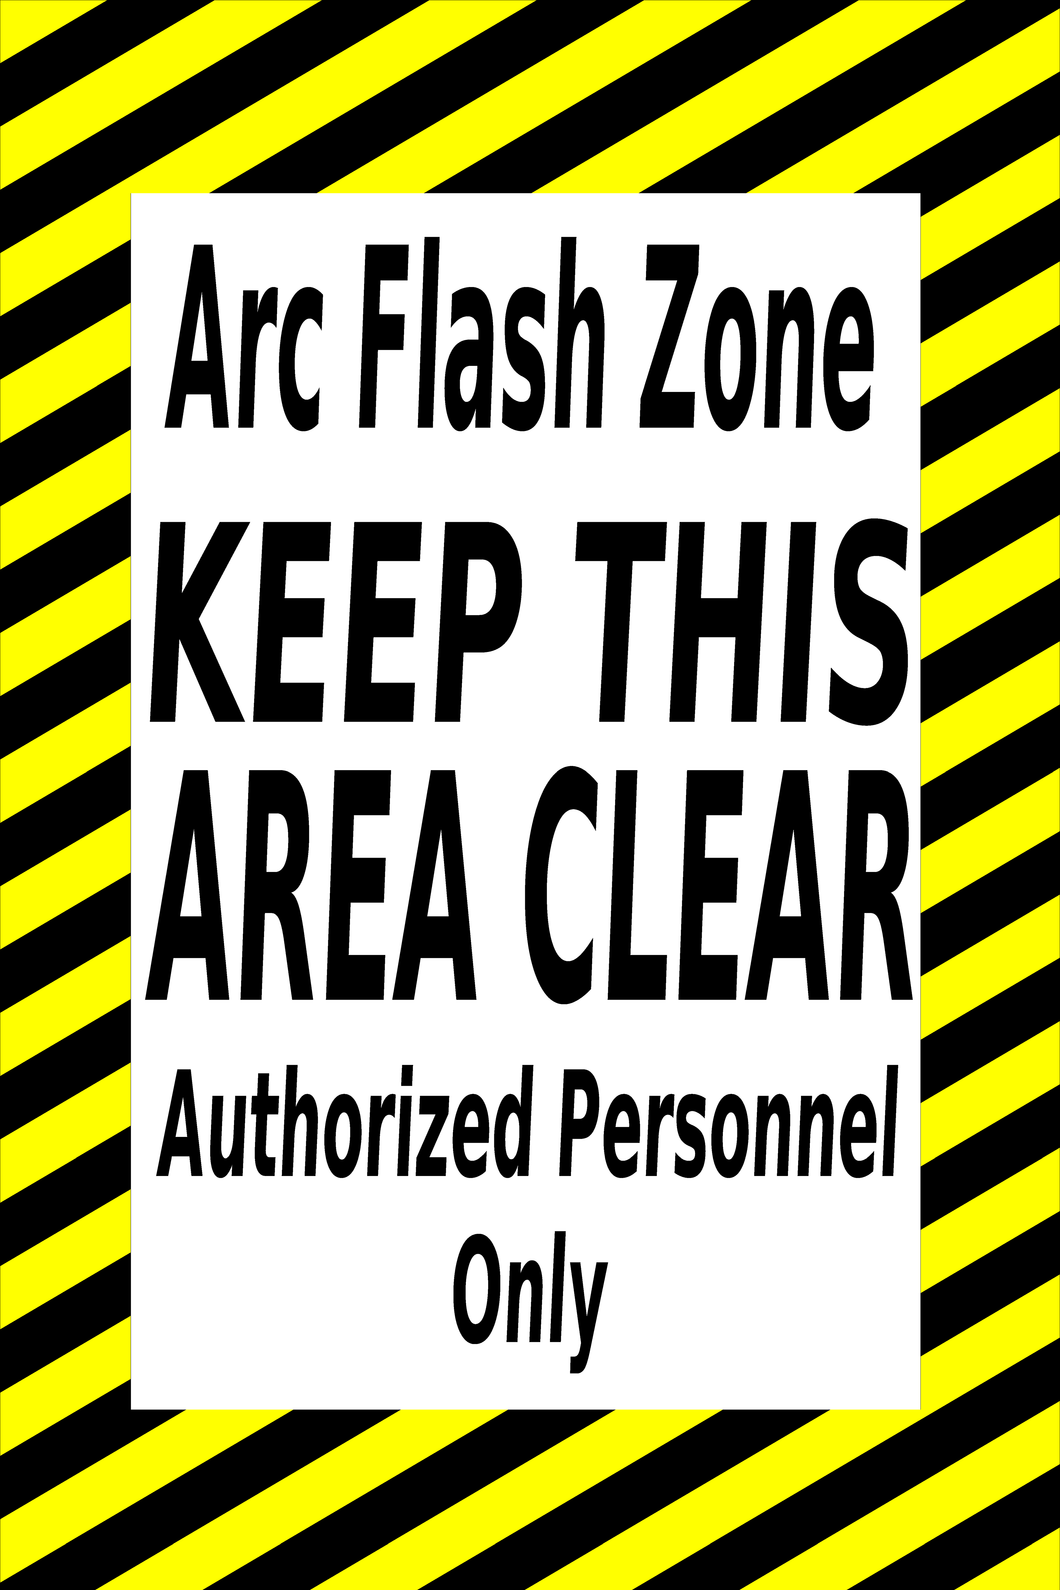 Arc Flash Zone, 24x36